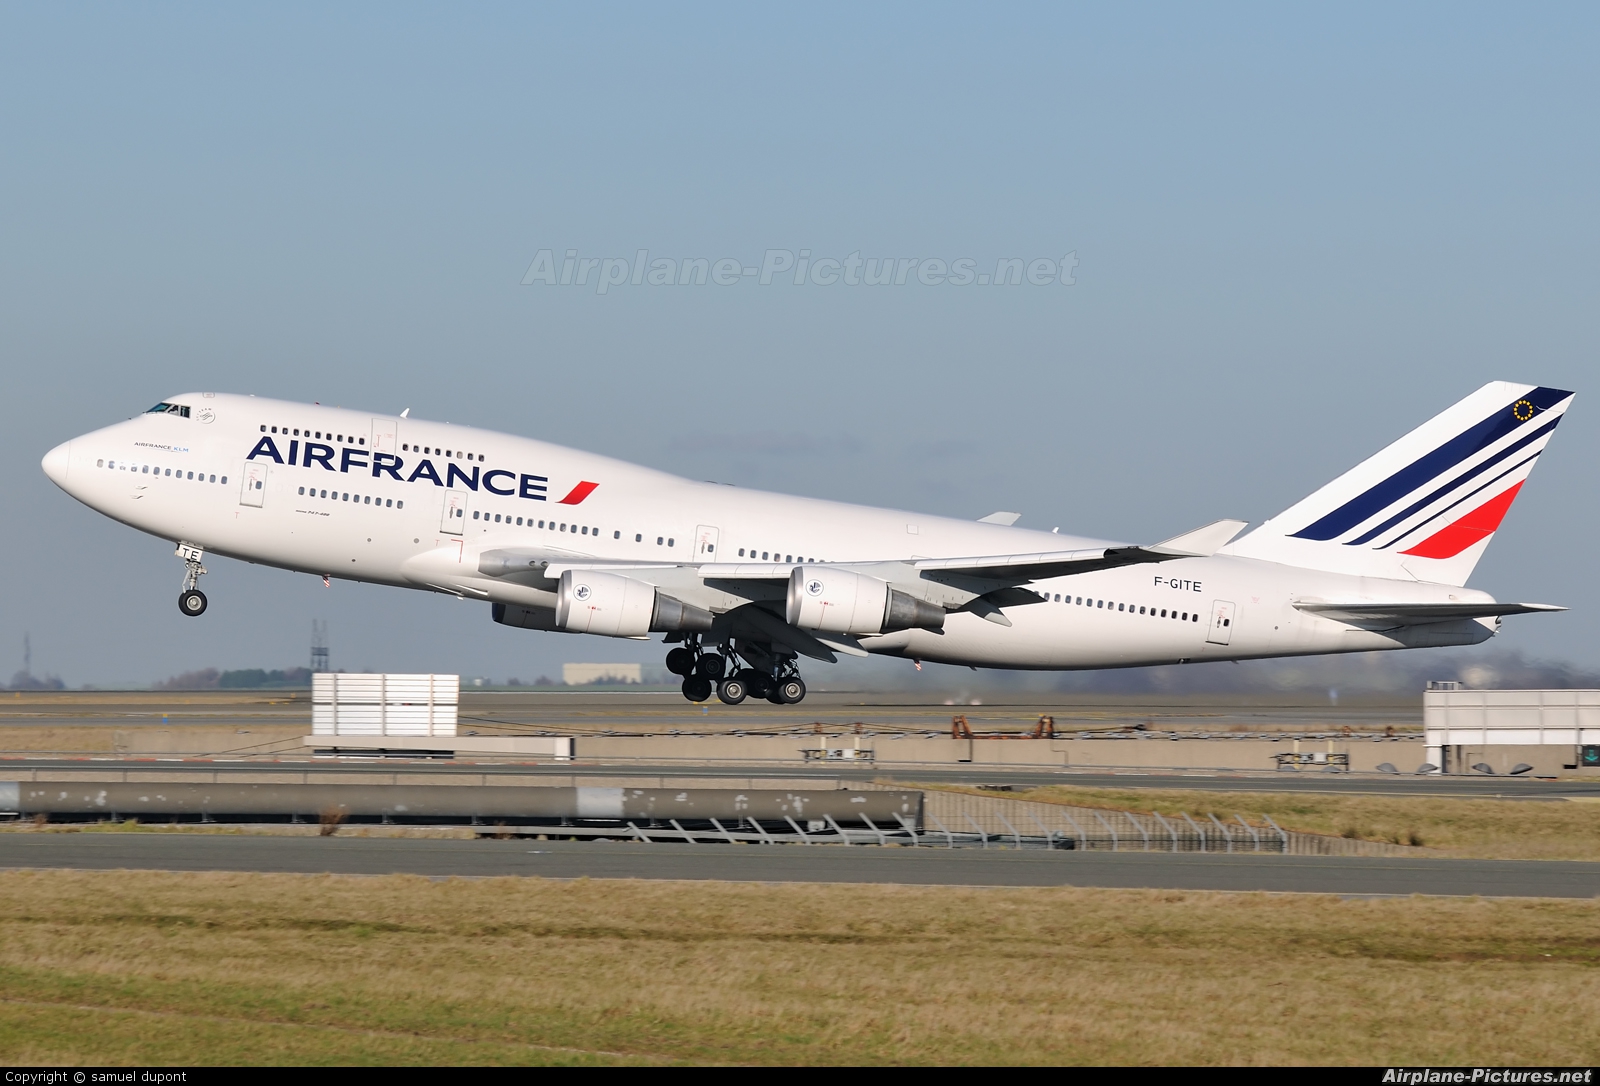 Air France | I Love Planes